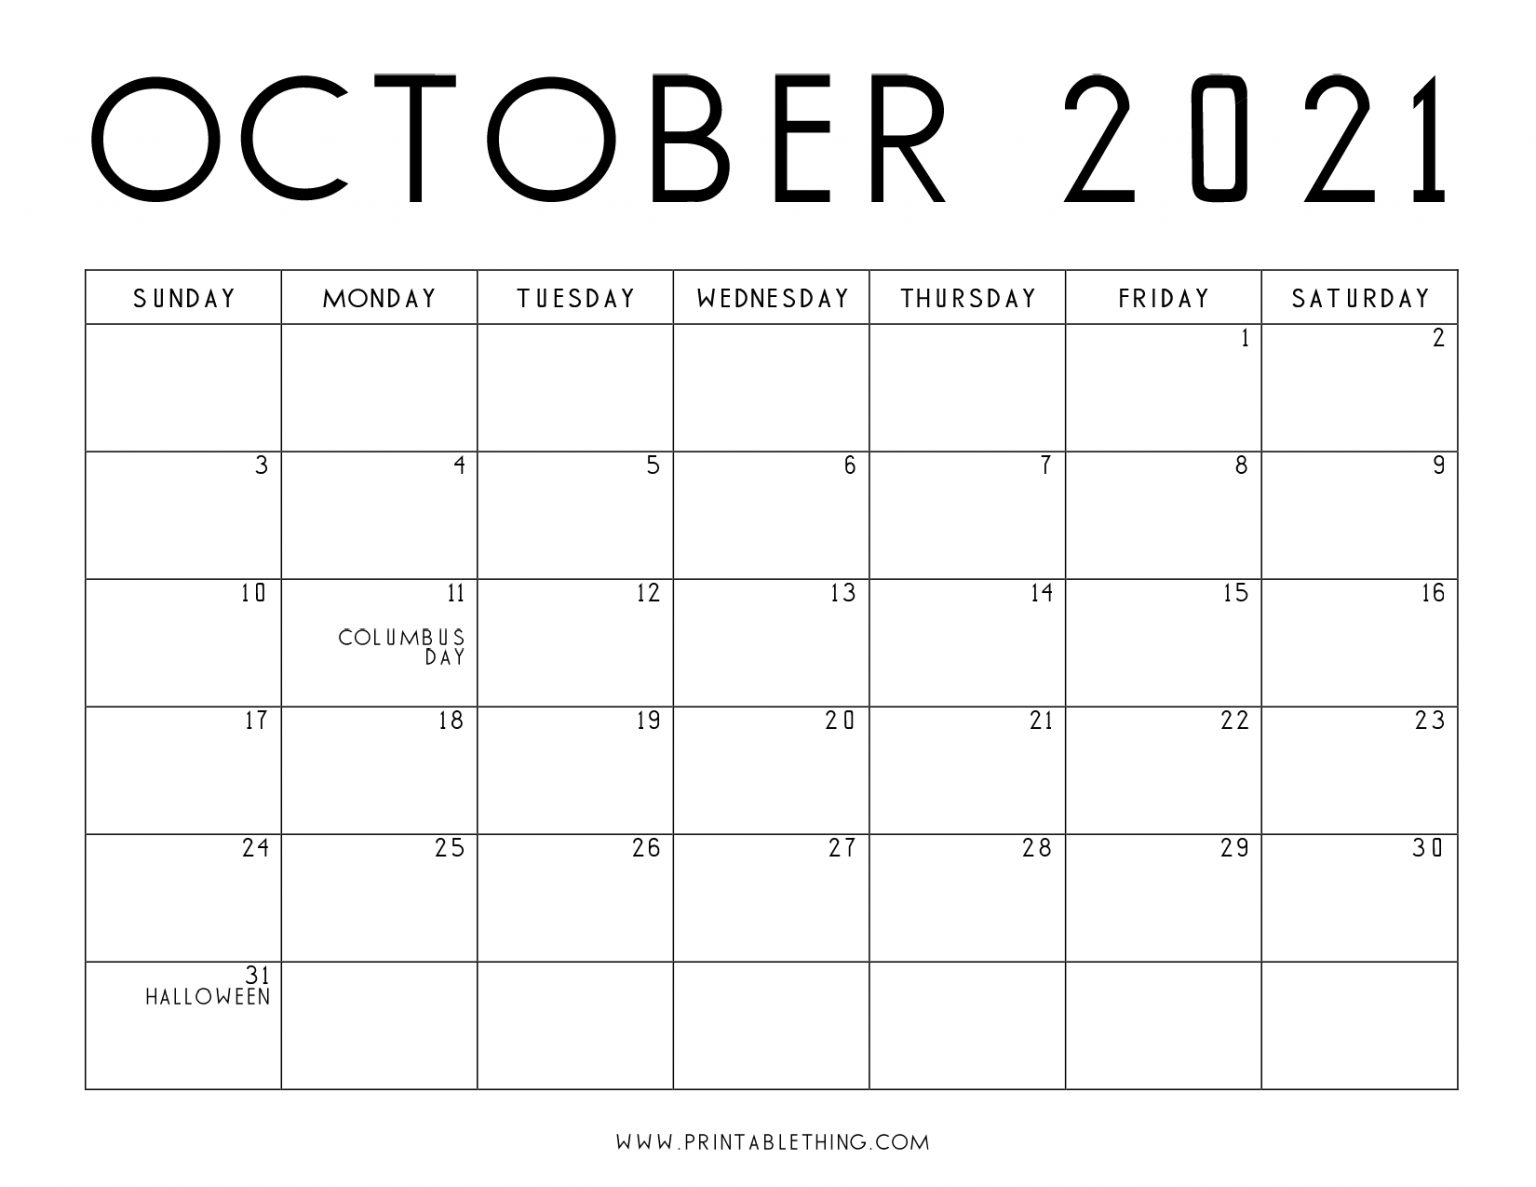 October 2021 Calendar Pdf, October 2021 Calendar Image Free